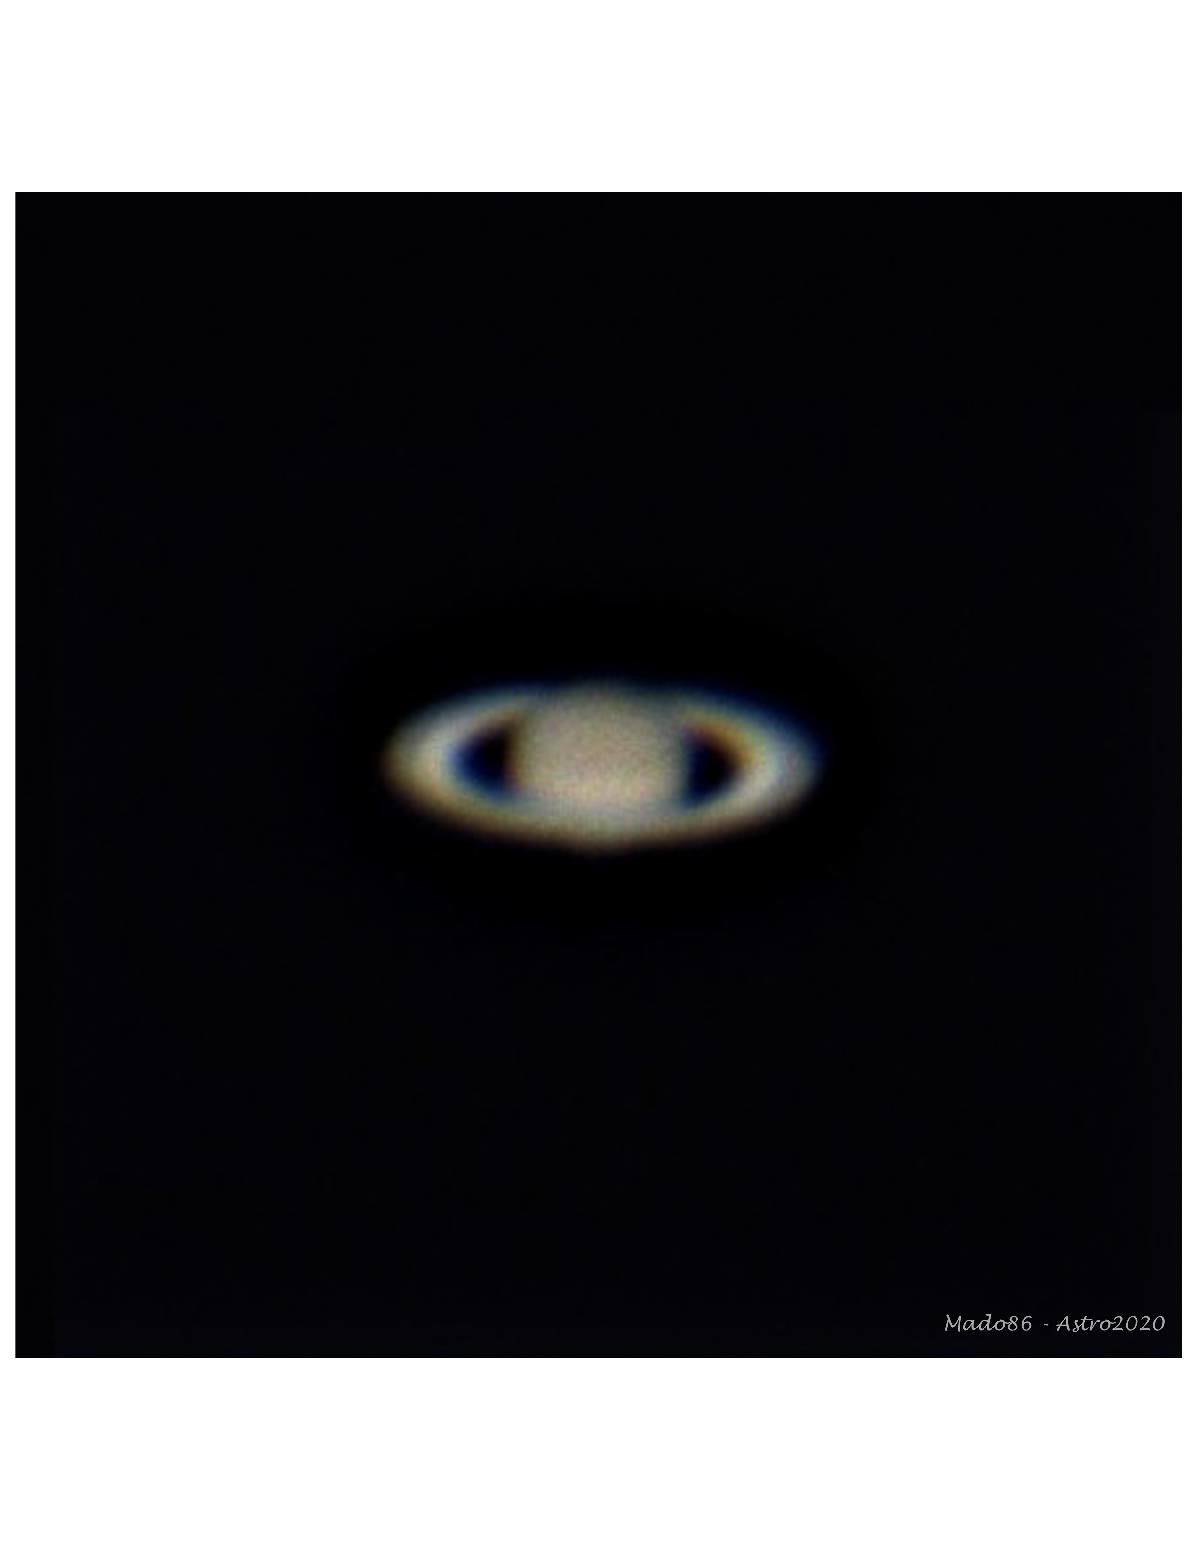 Saturne le 7 07 2020